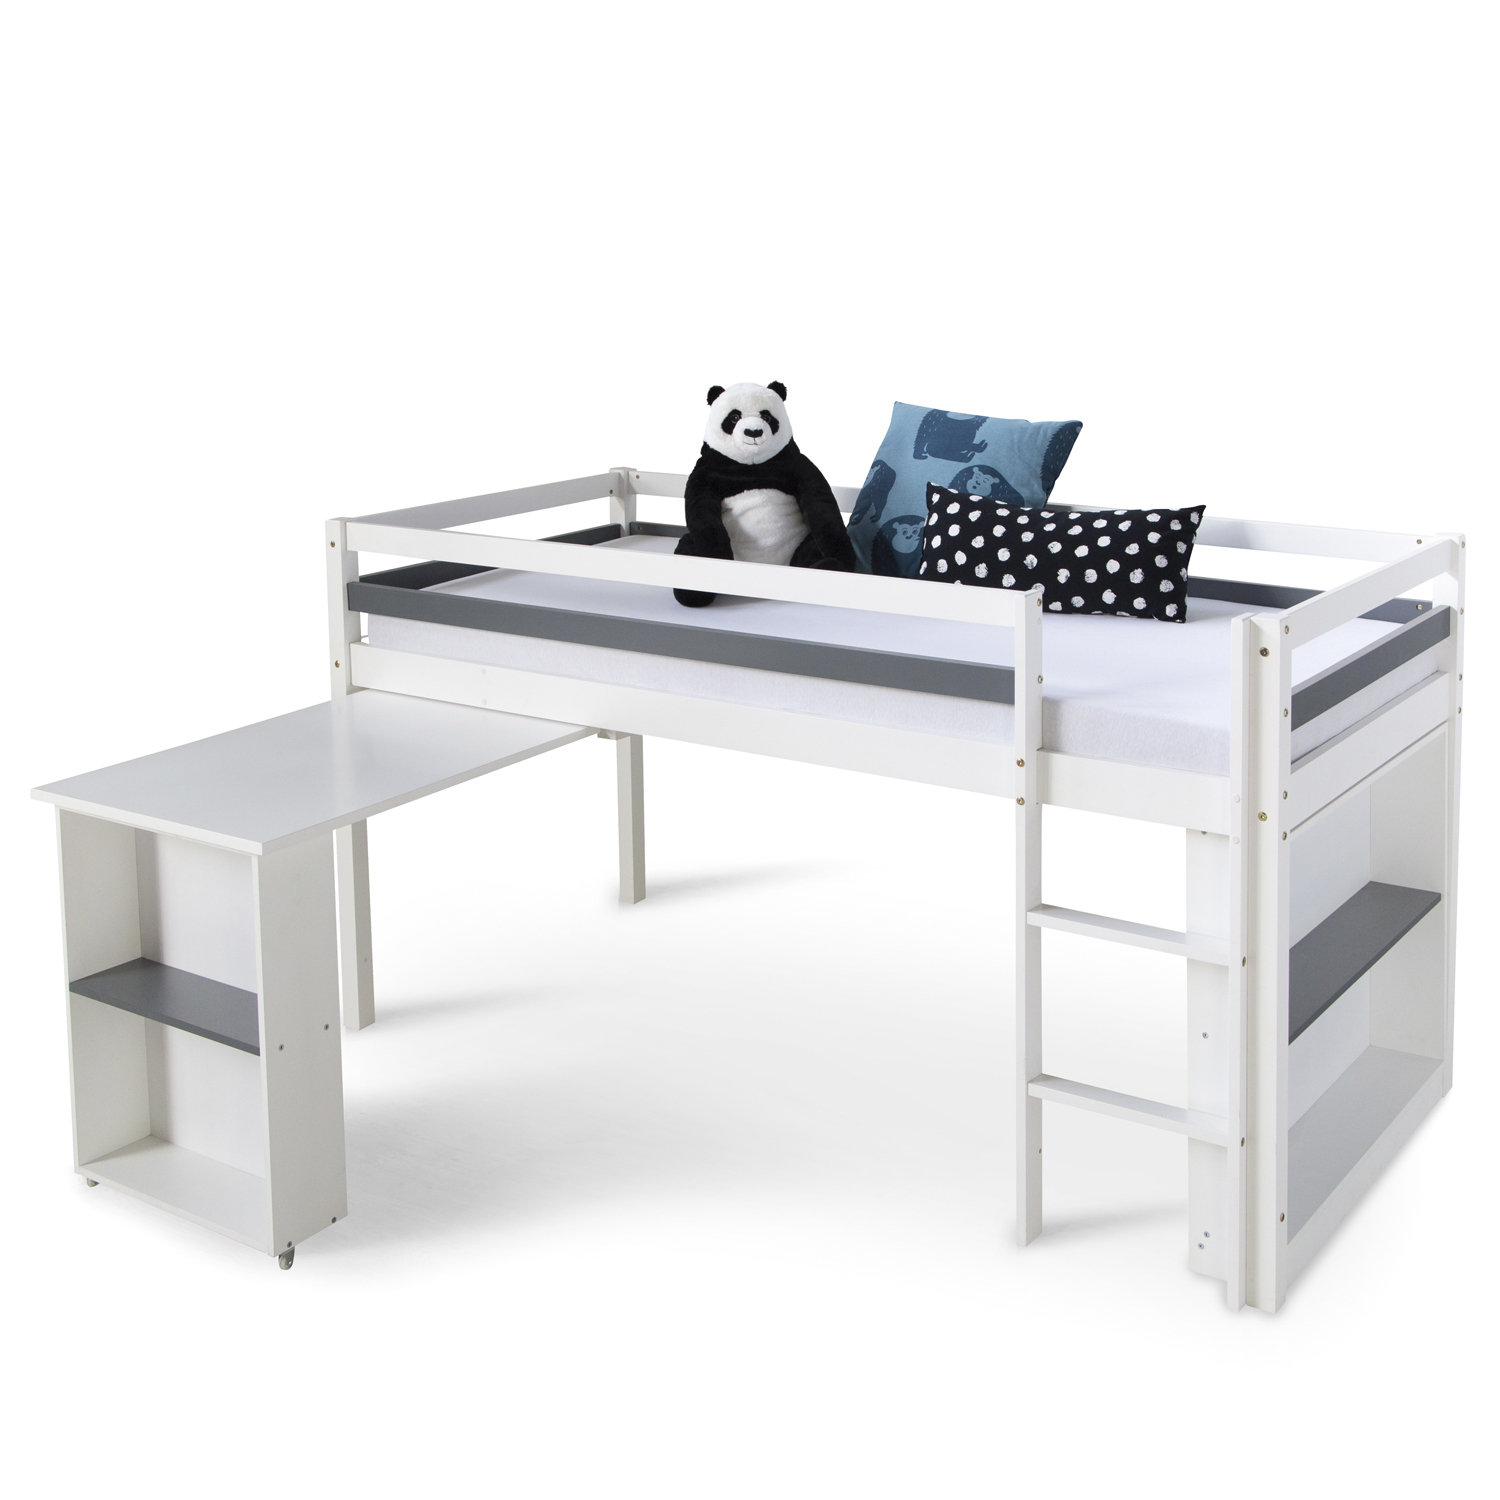 Children´s Bed Bunk Bed 90x200 White Wood Kids Bed High Sleeper Cot Desk